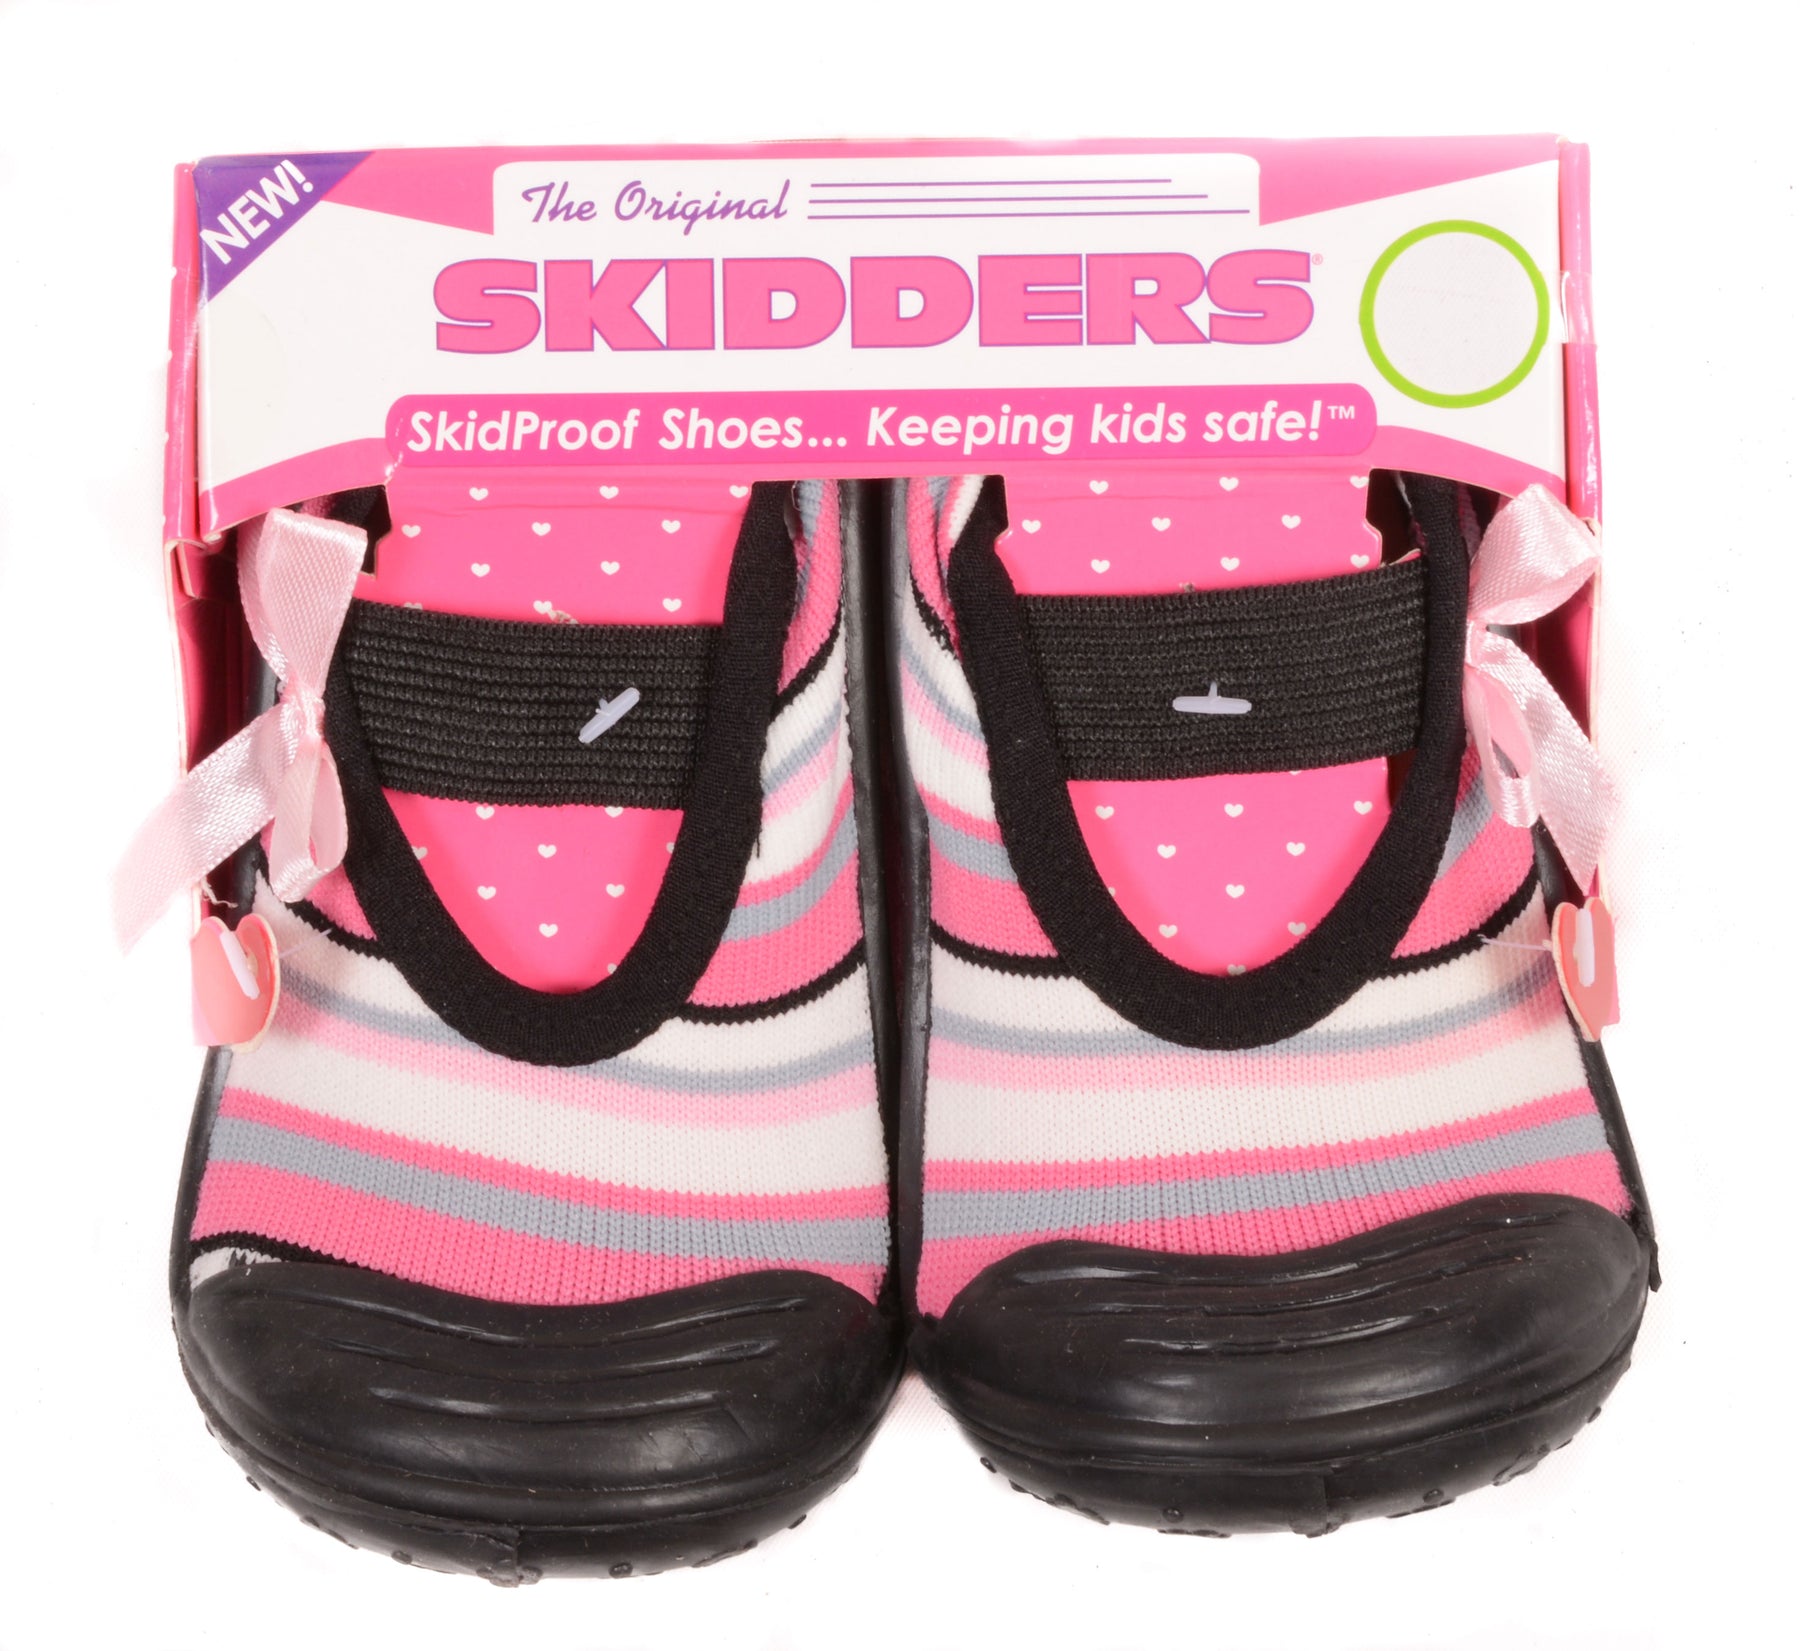 skidders for babies